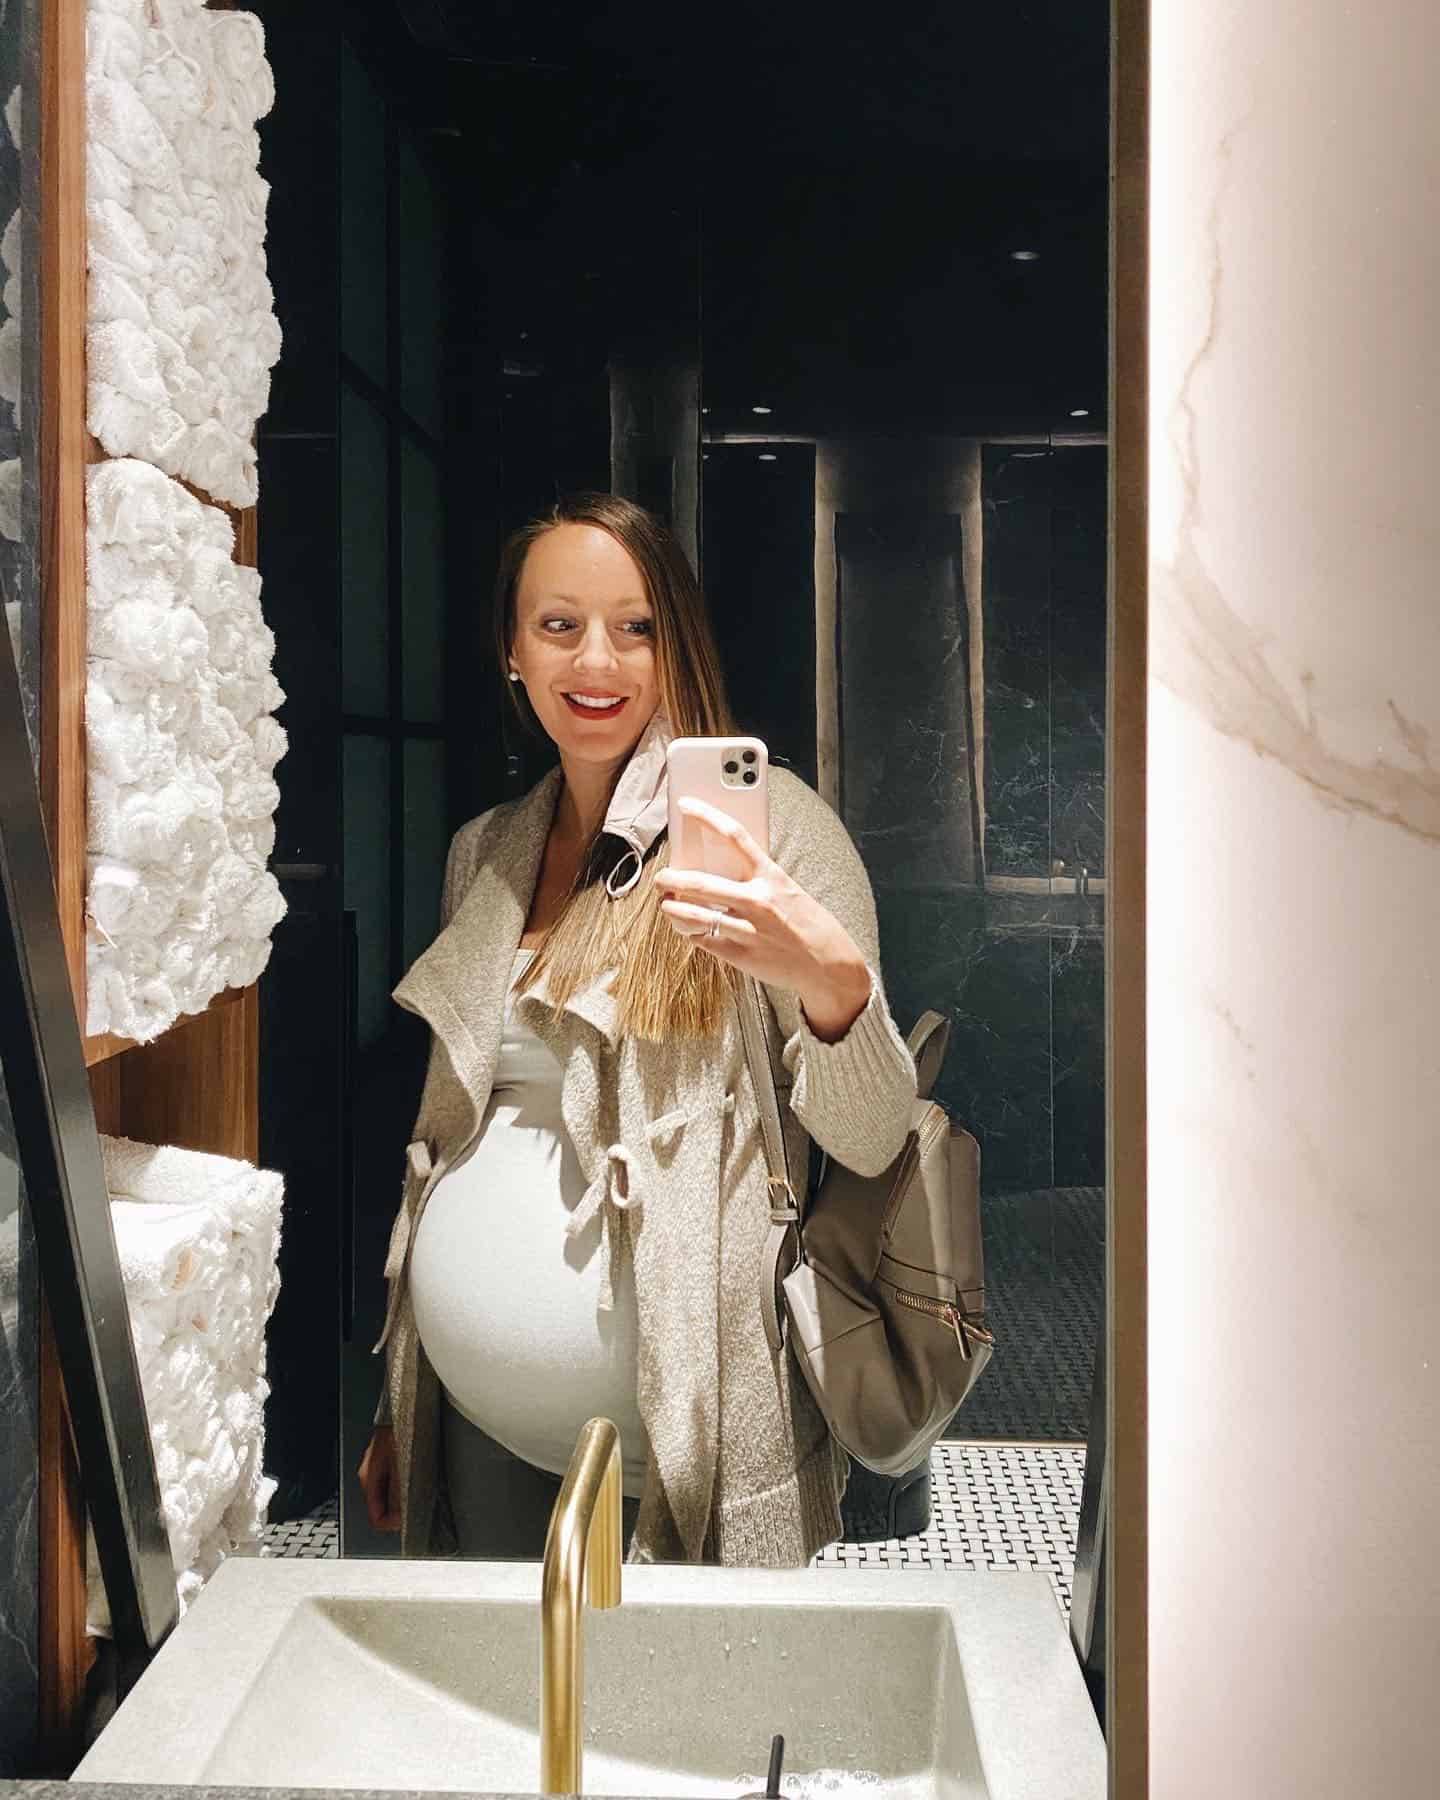 Lindsay takes a selfie in a bathroom mirror.